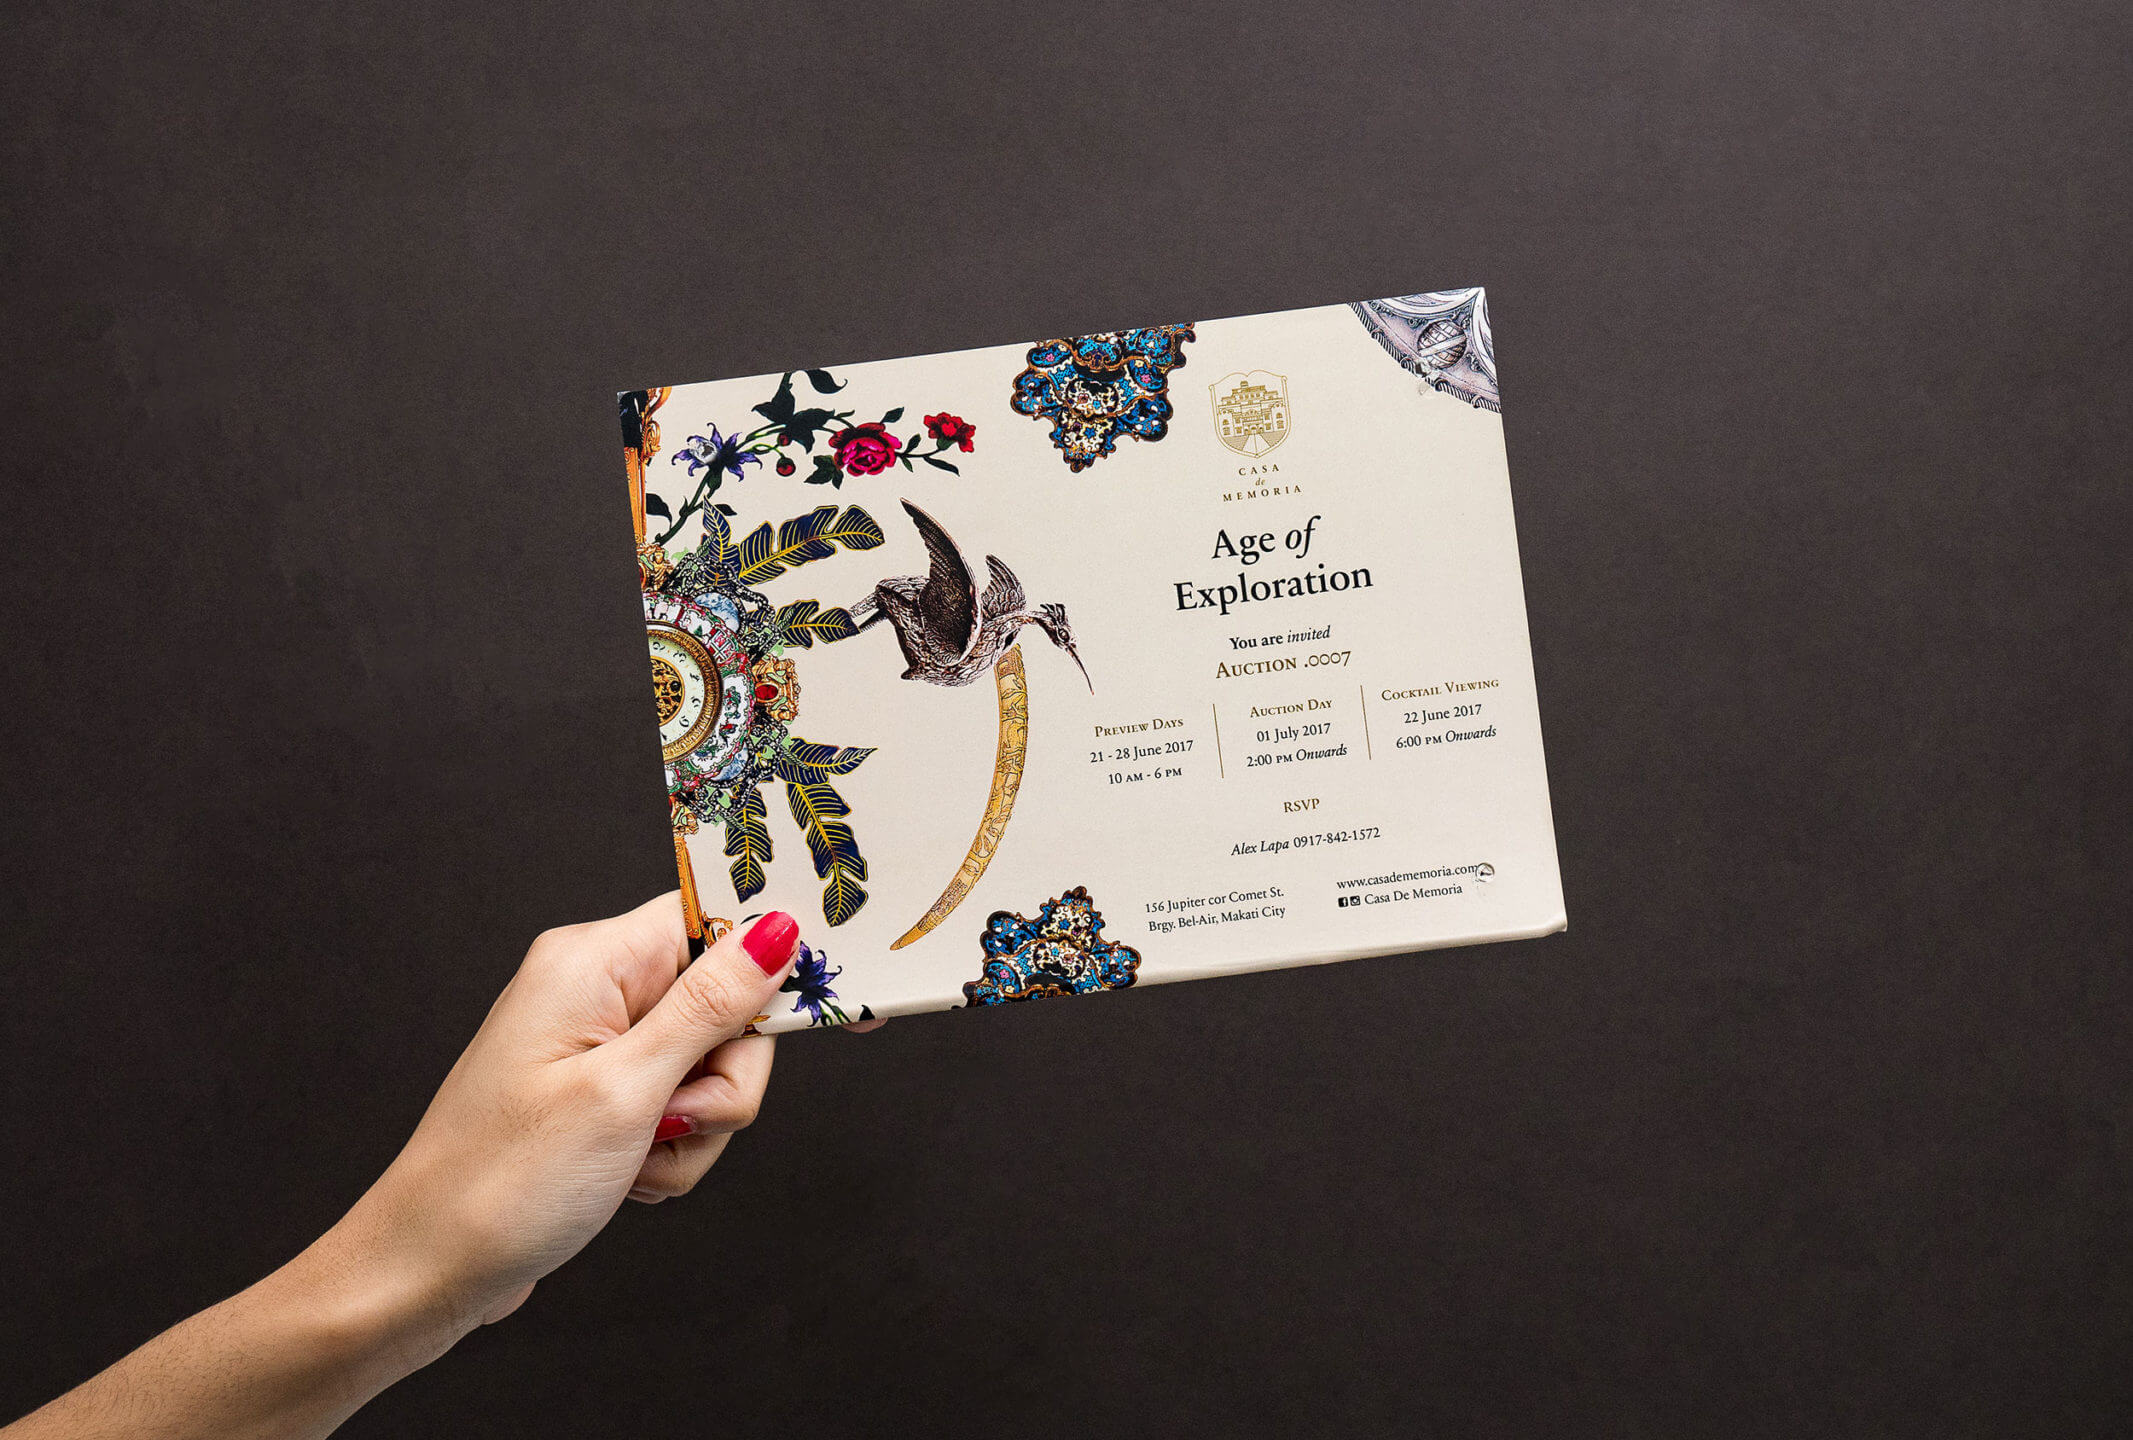 An invitation with a kaleidoscope design for auction house brand Casa de Memoria